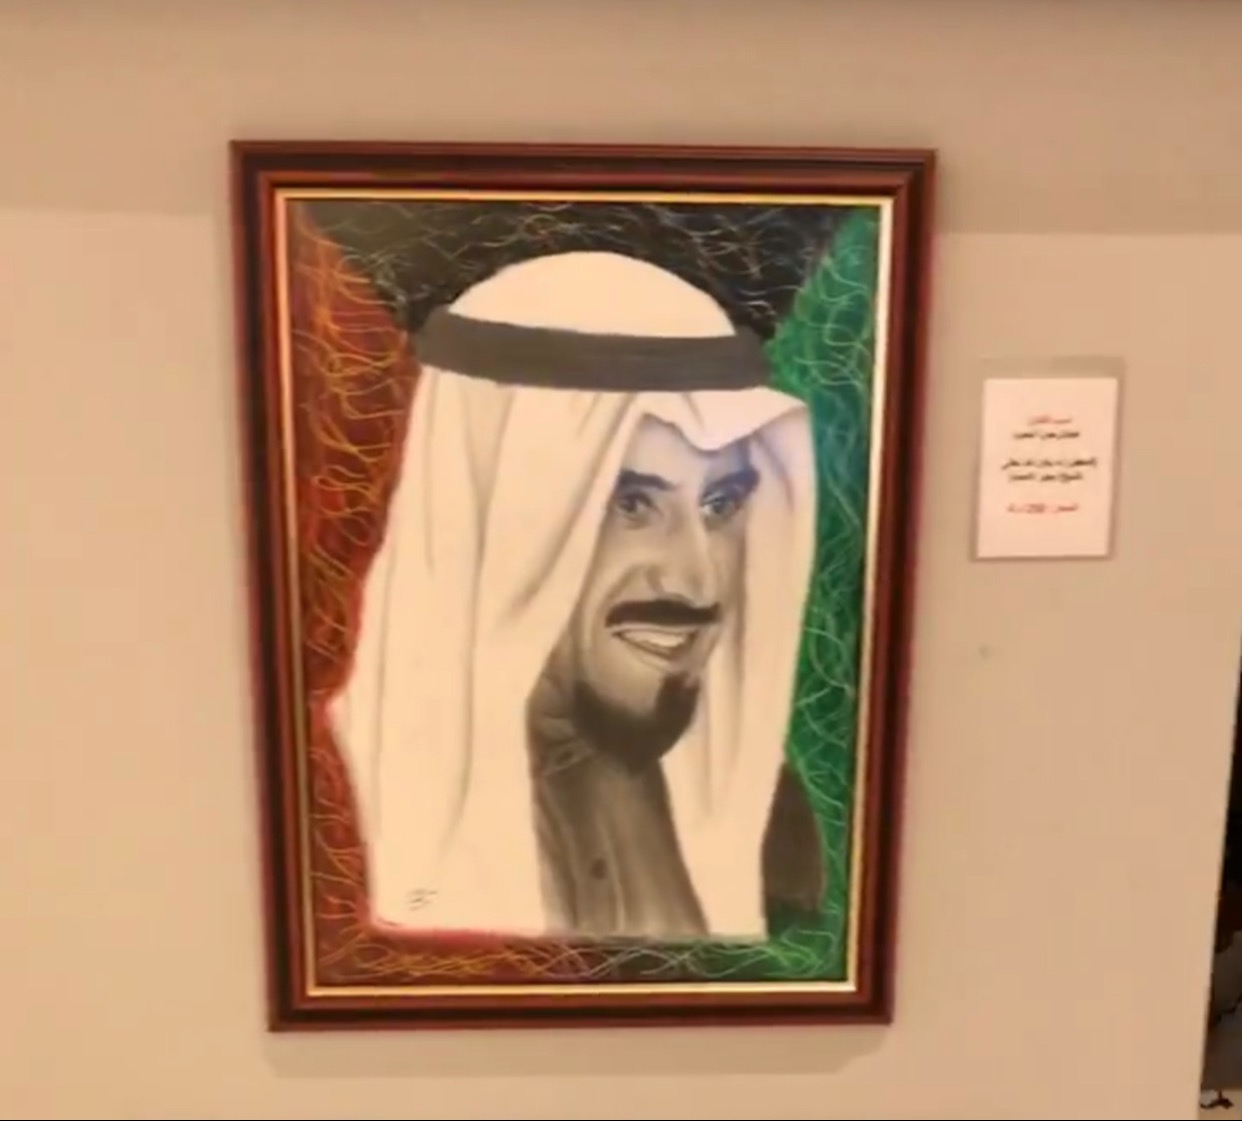 Drawing of sheikh Jaber al ahmad aljaber alsubah